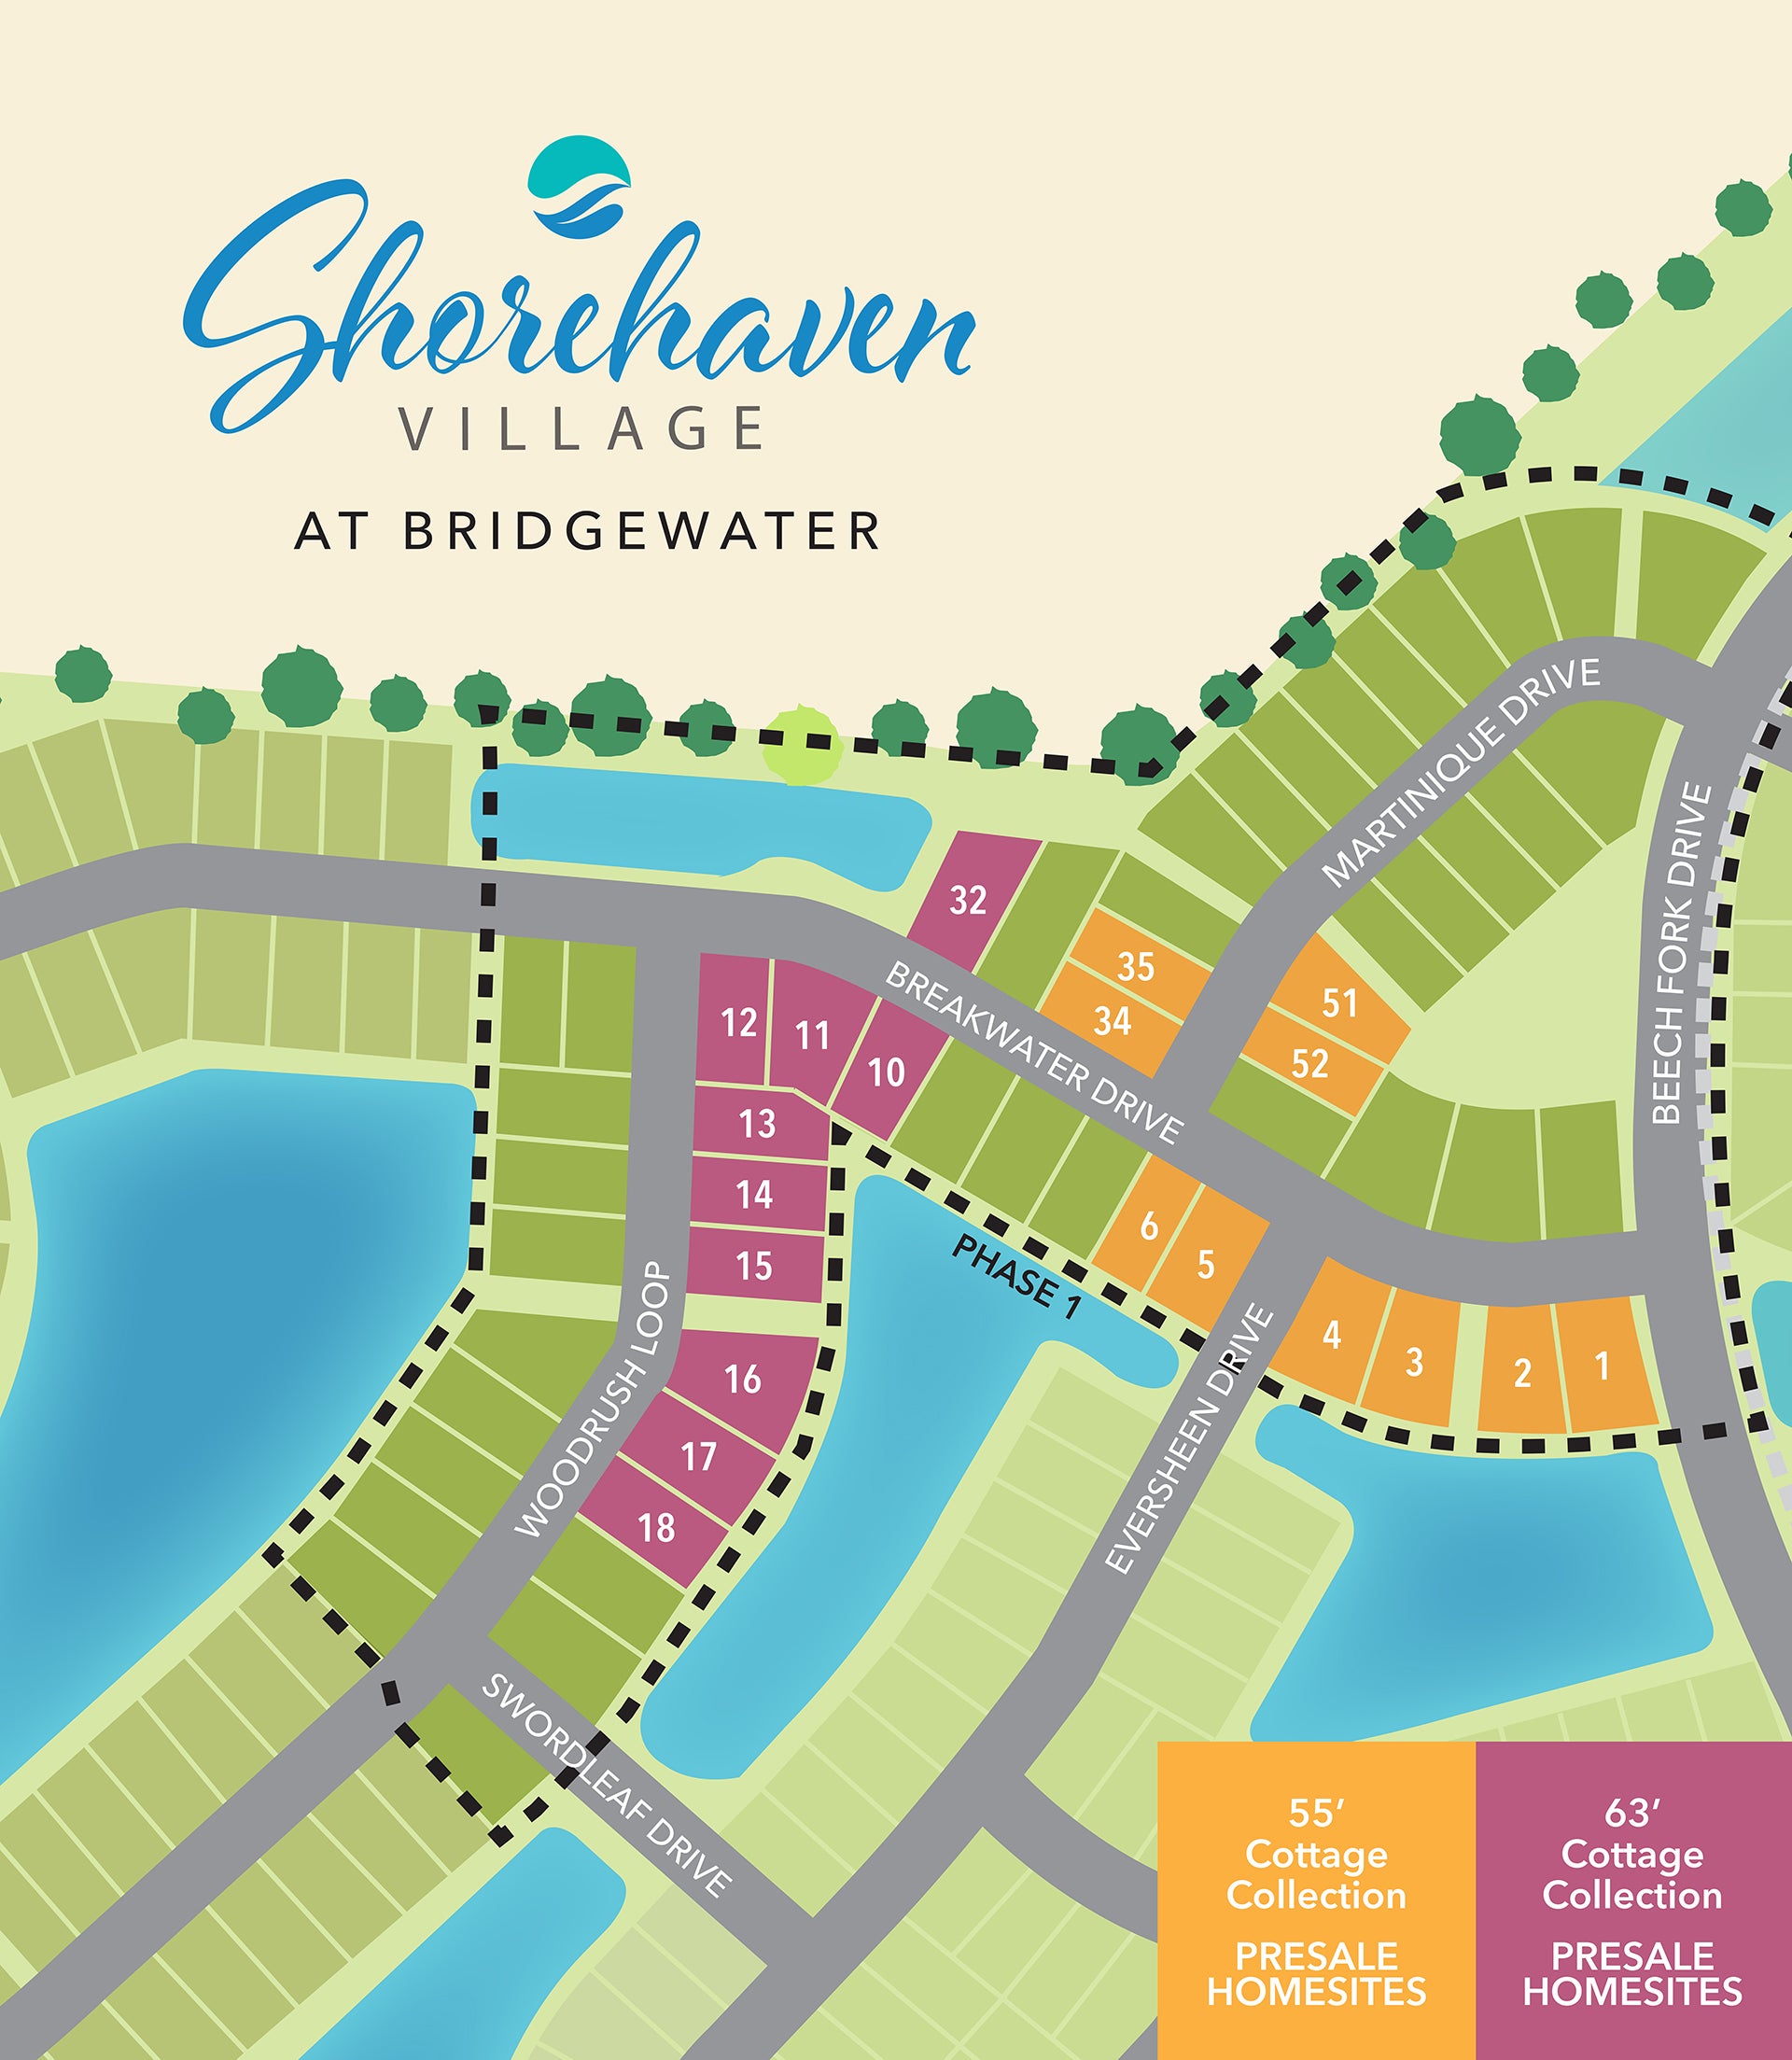 Little River, SC Bridgewater - Shorehaven Village New Homes